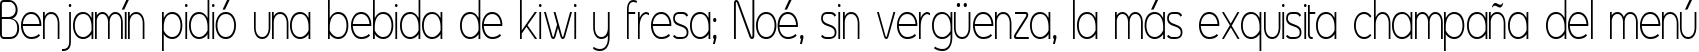 Пример написания шрифтом Asenine Thin текста на испанском